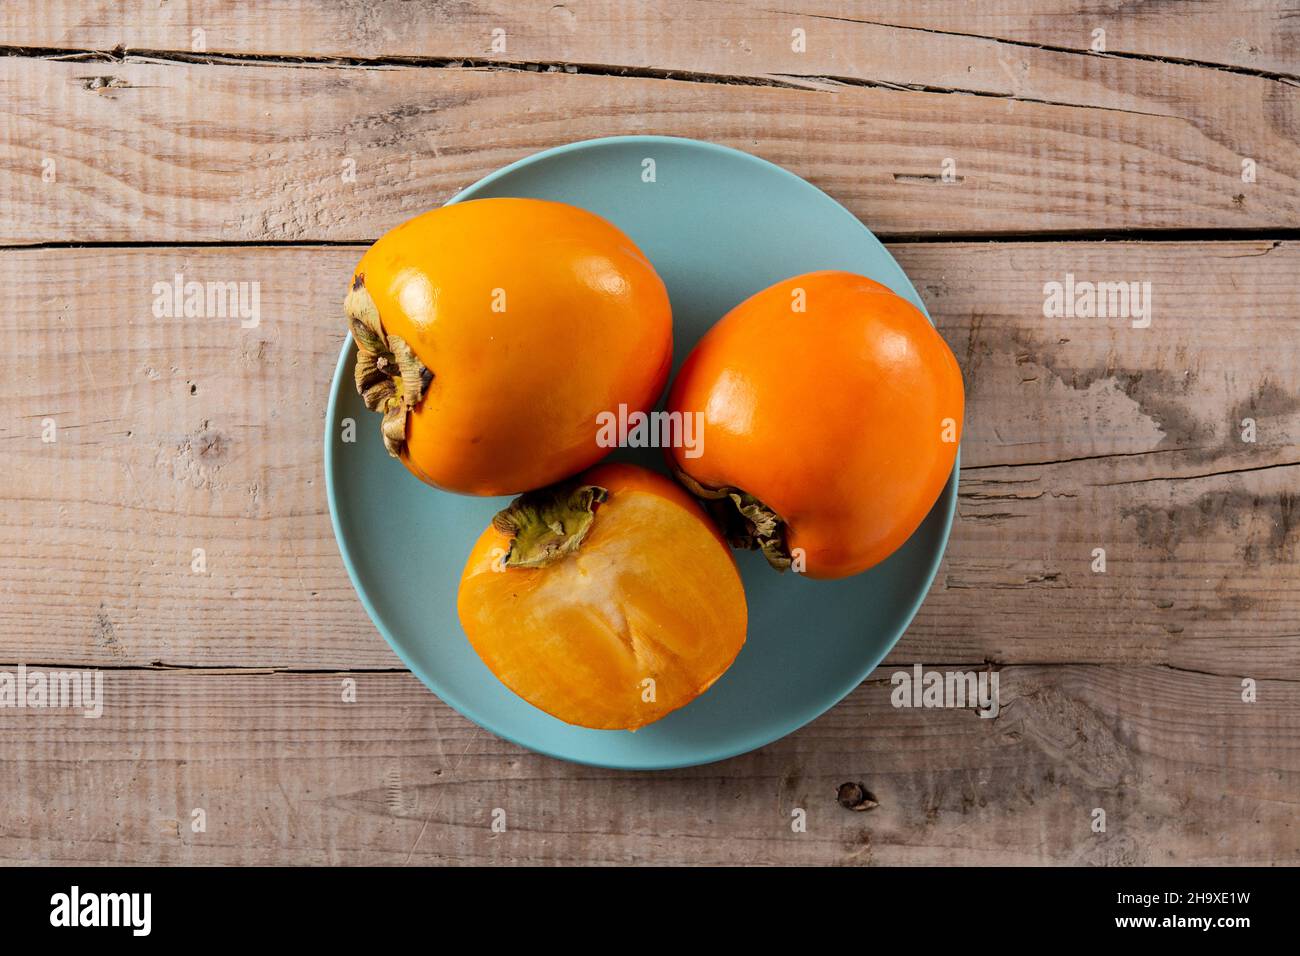 Fresh persimmon fruit on wooden table Stock Photo